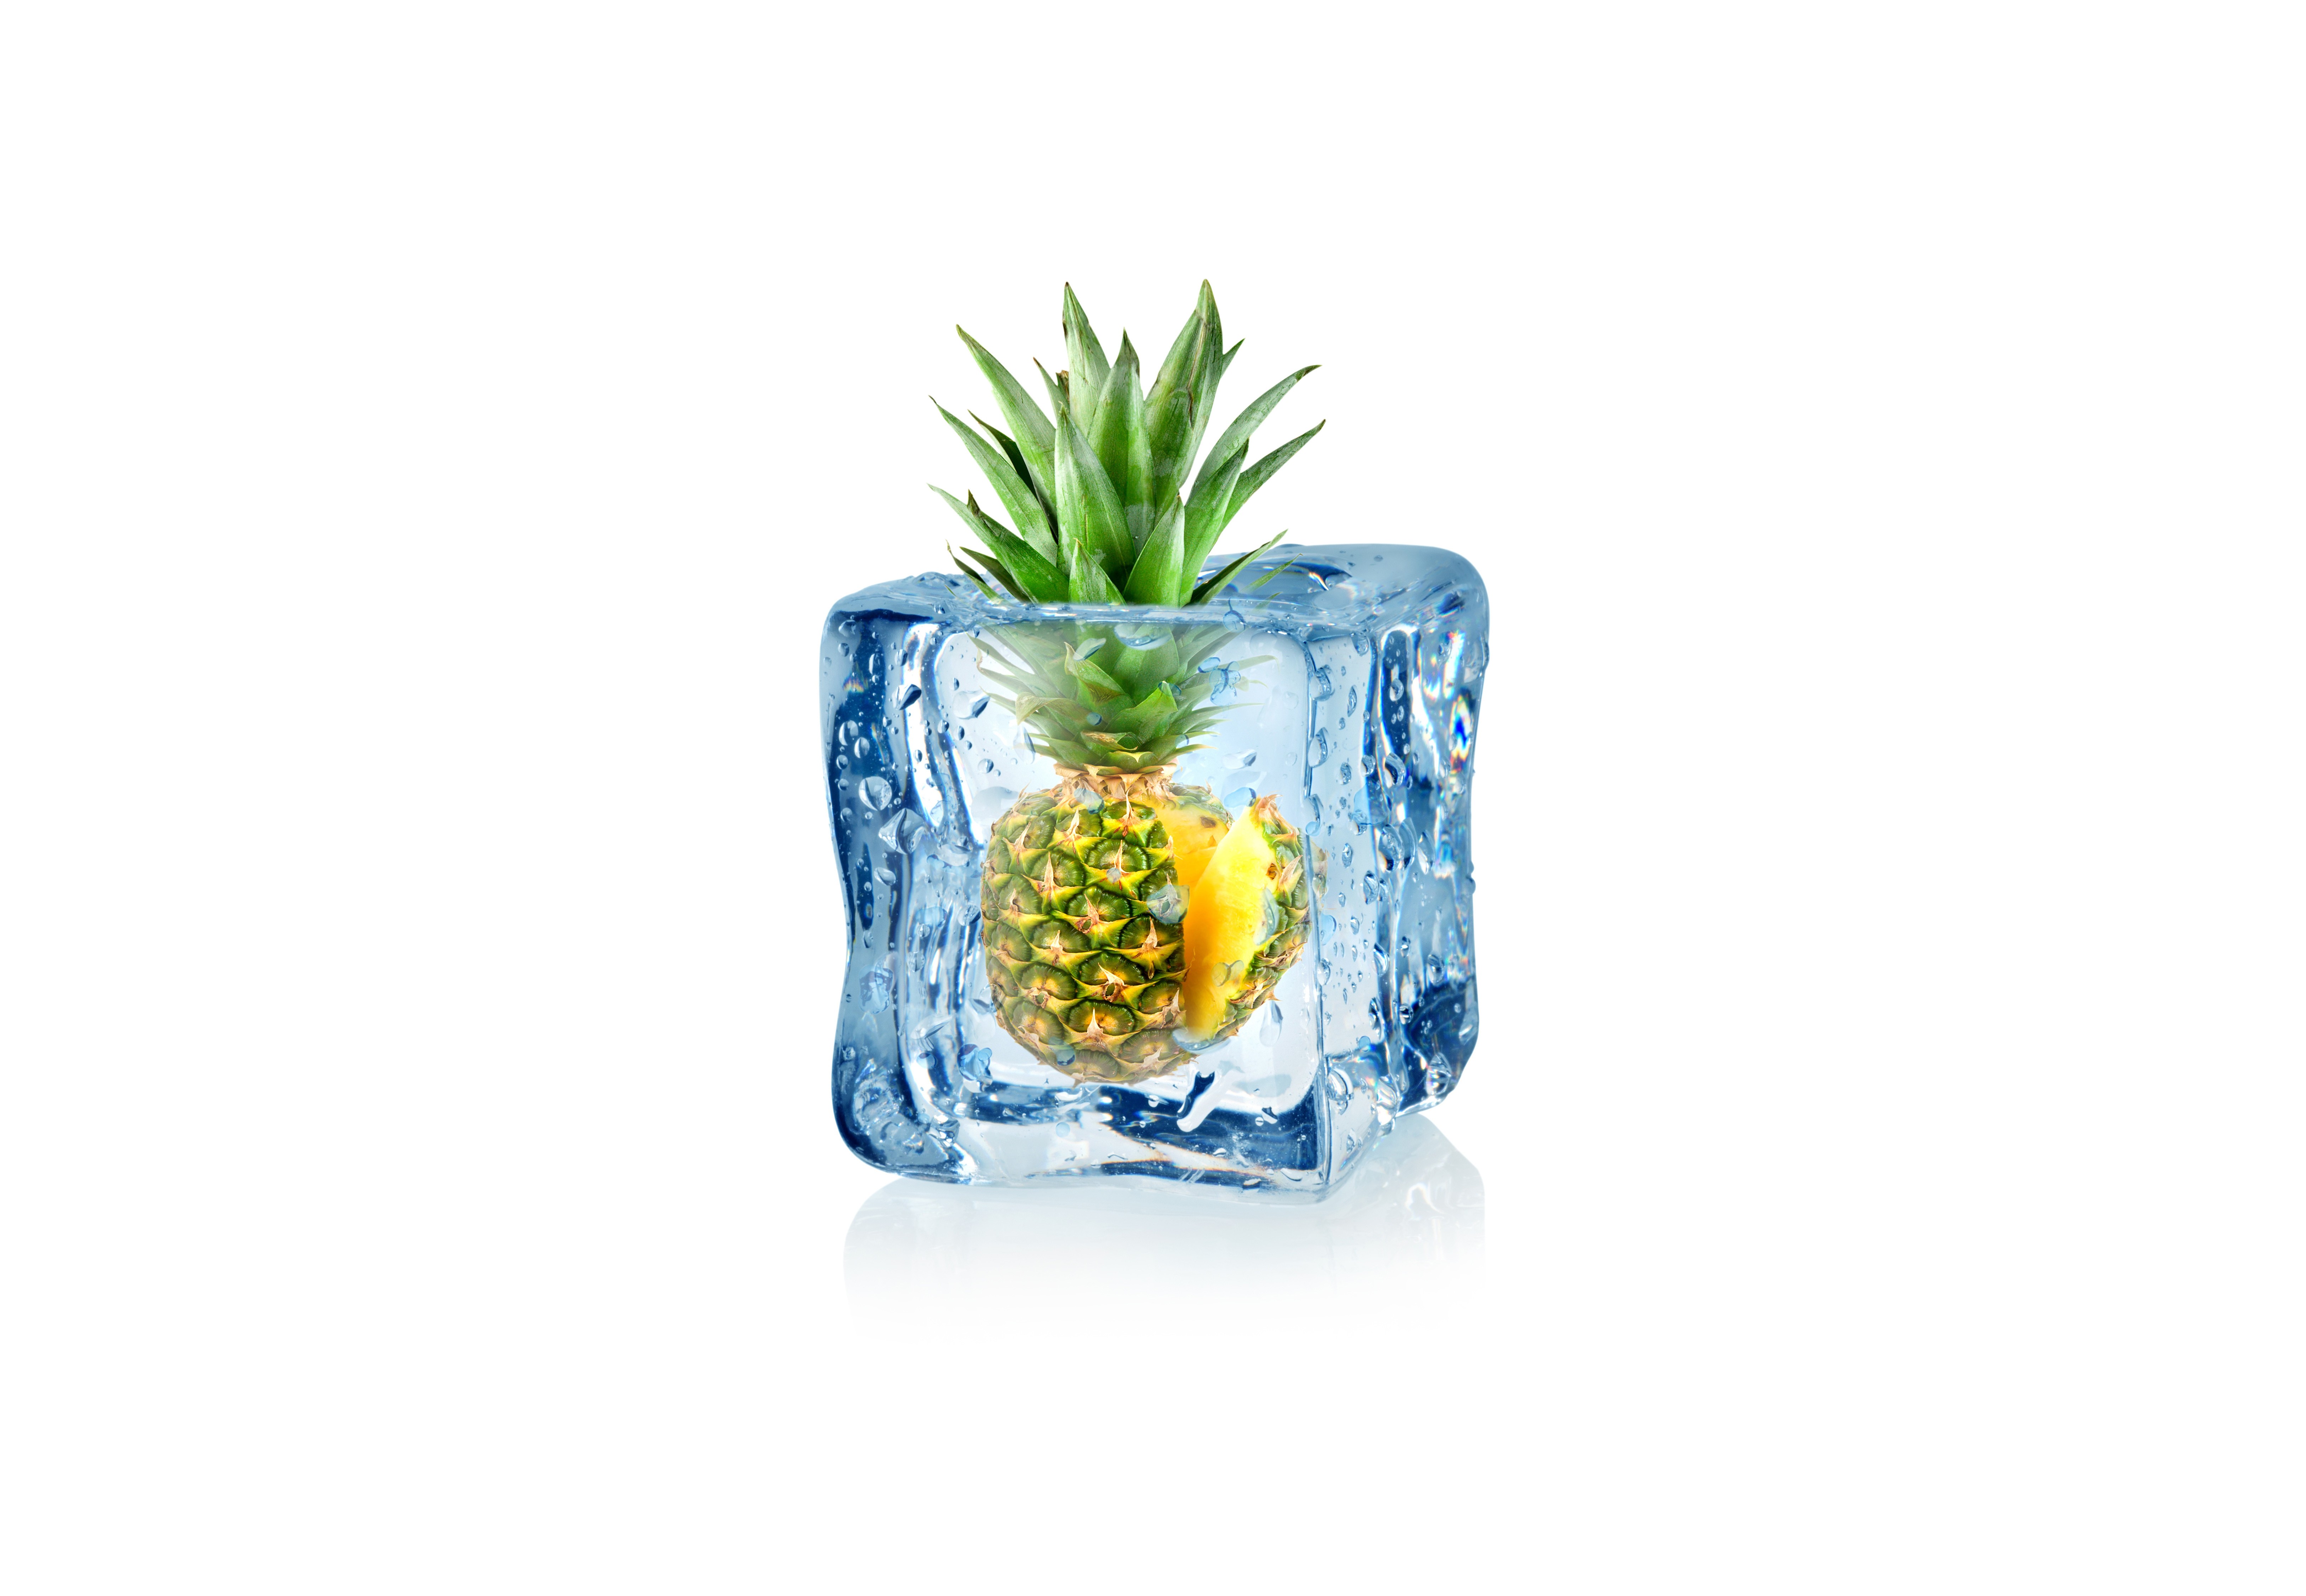 General 6500x4500 minimalism white background fruit digital art ice cubes pineapples leaves water drops 3D Blocks food simple background CGI